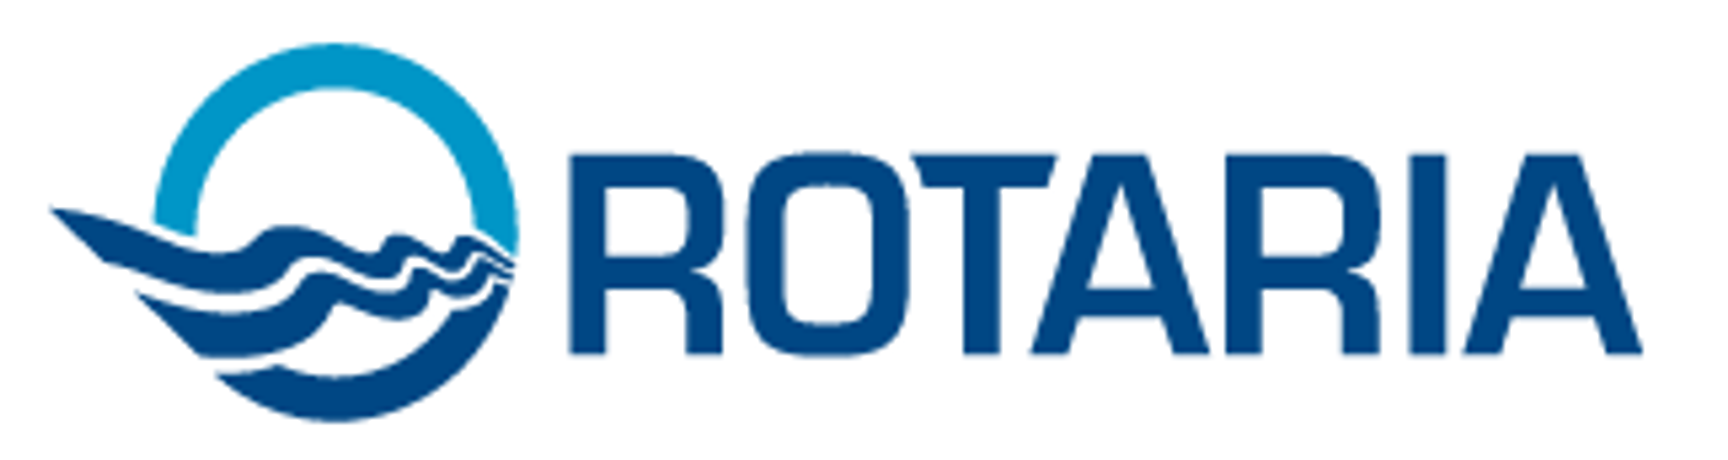 Rotaria - Model 75 KW - Biogas Plants